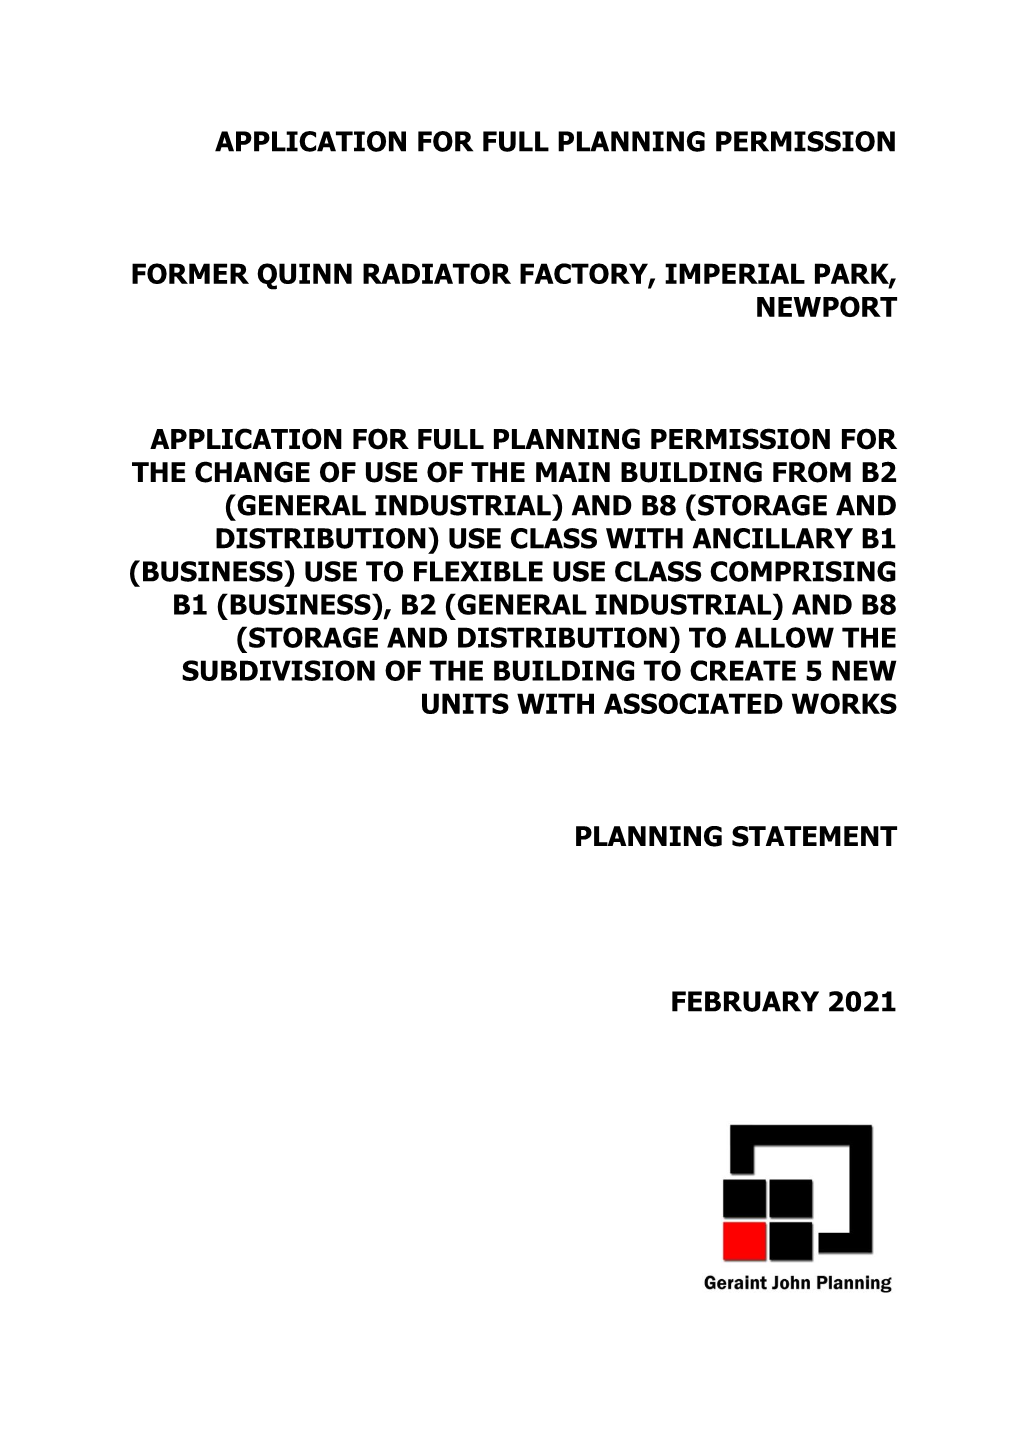 Application for Full Planning Permission Former Quinn